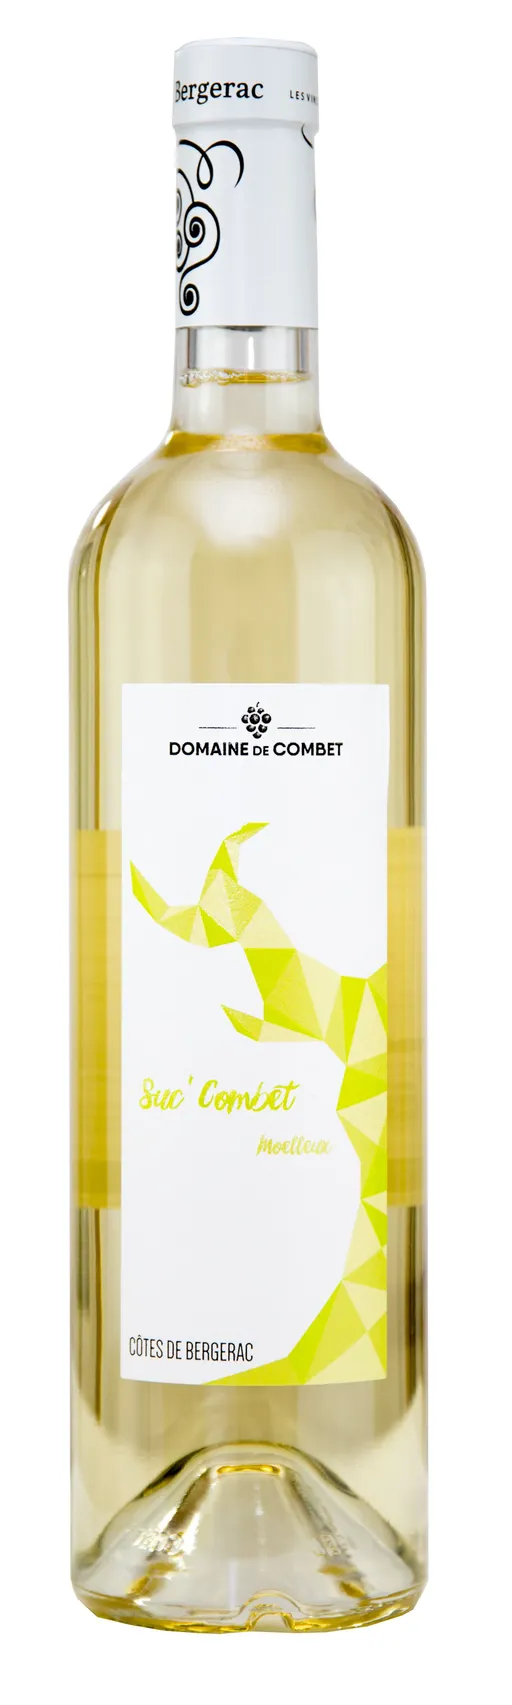 Earl de Combet SUC'COMBET, Weiß, 2021, Côtes de Bergerac. Flaschenabbildung